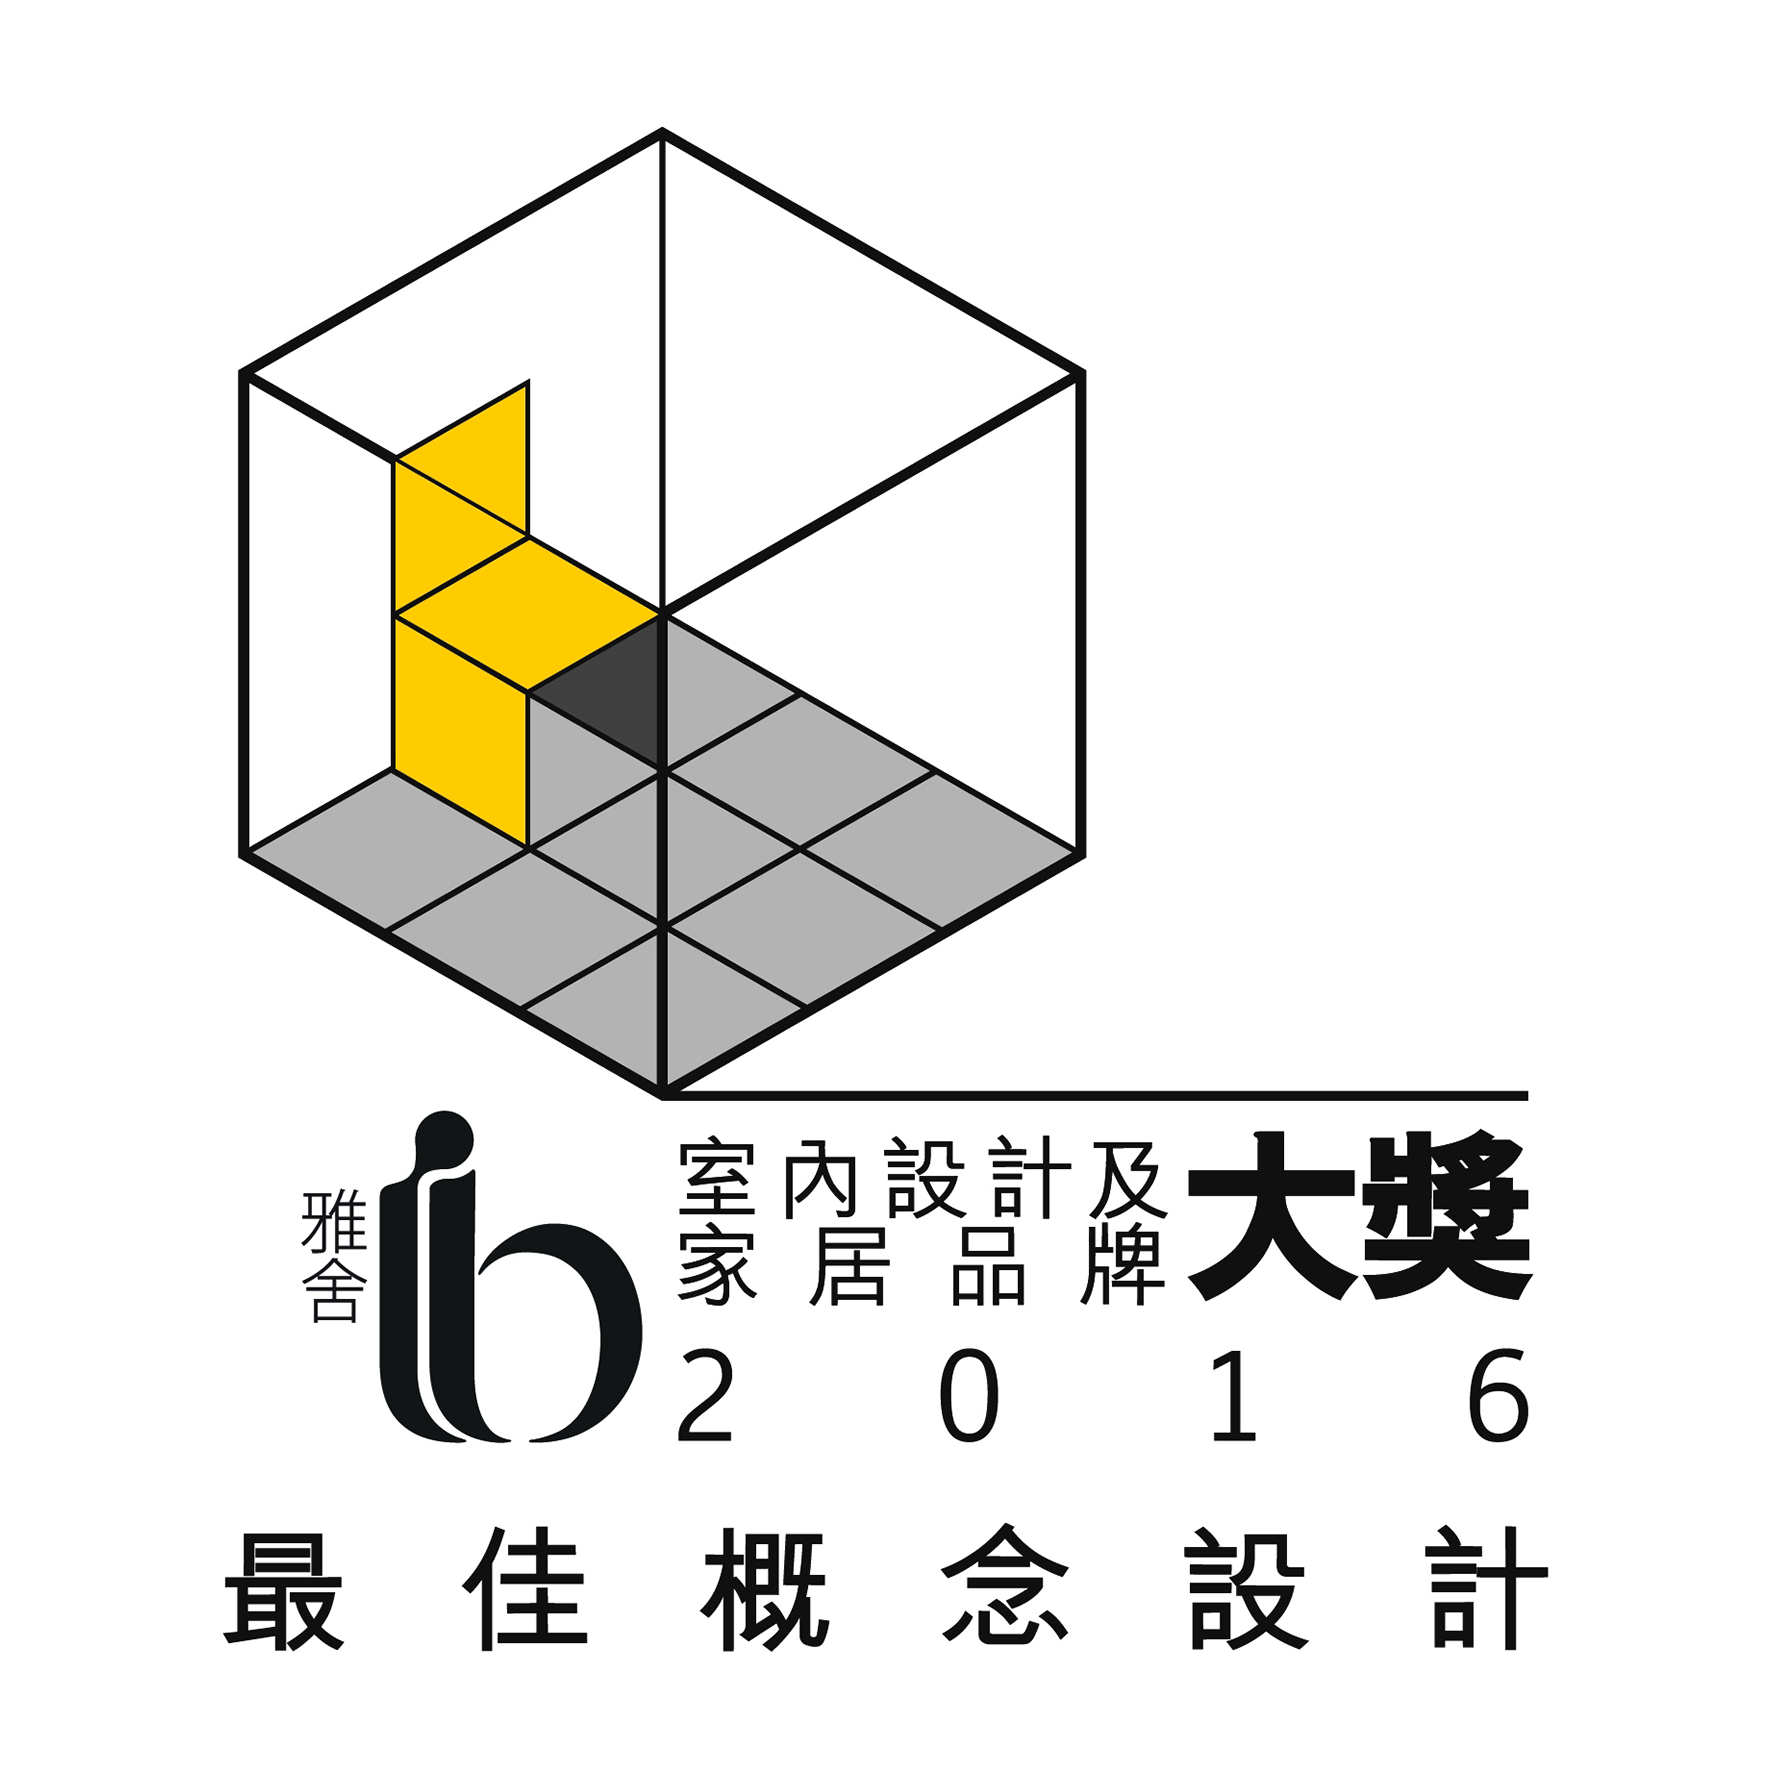 Best Style Award, IB Interior Design Award 2016